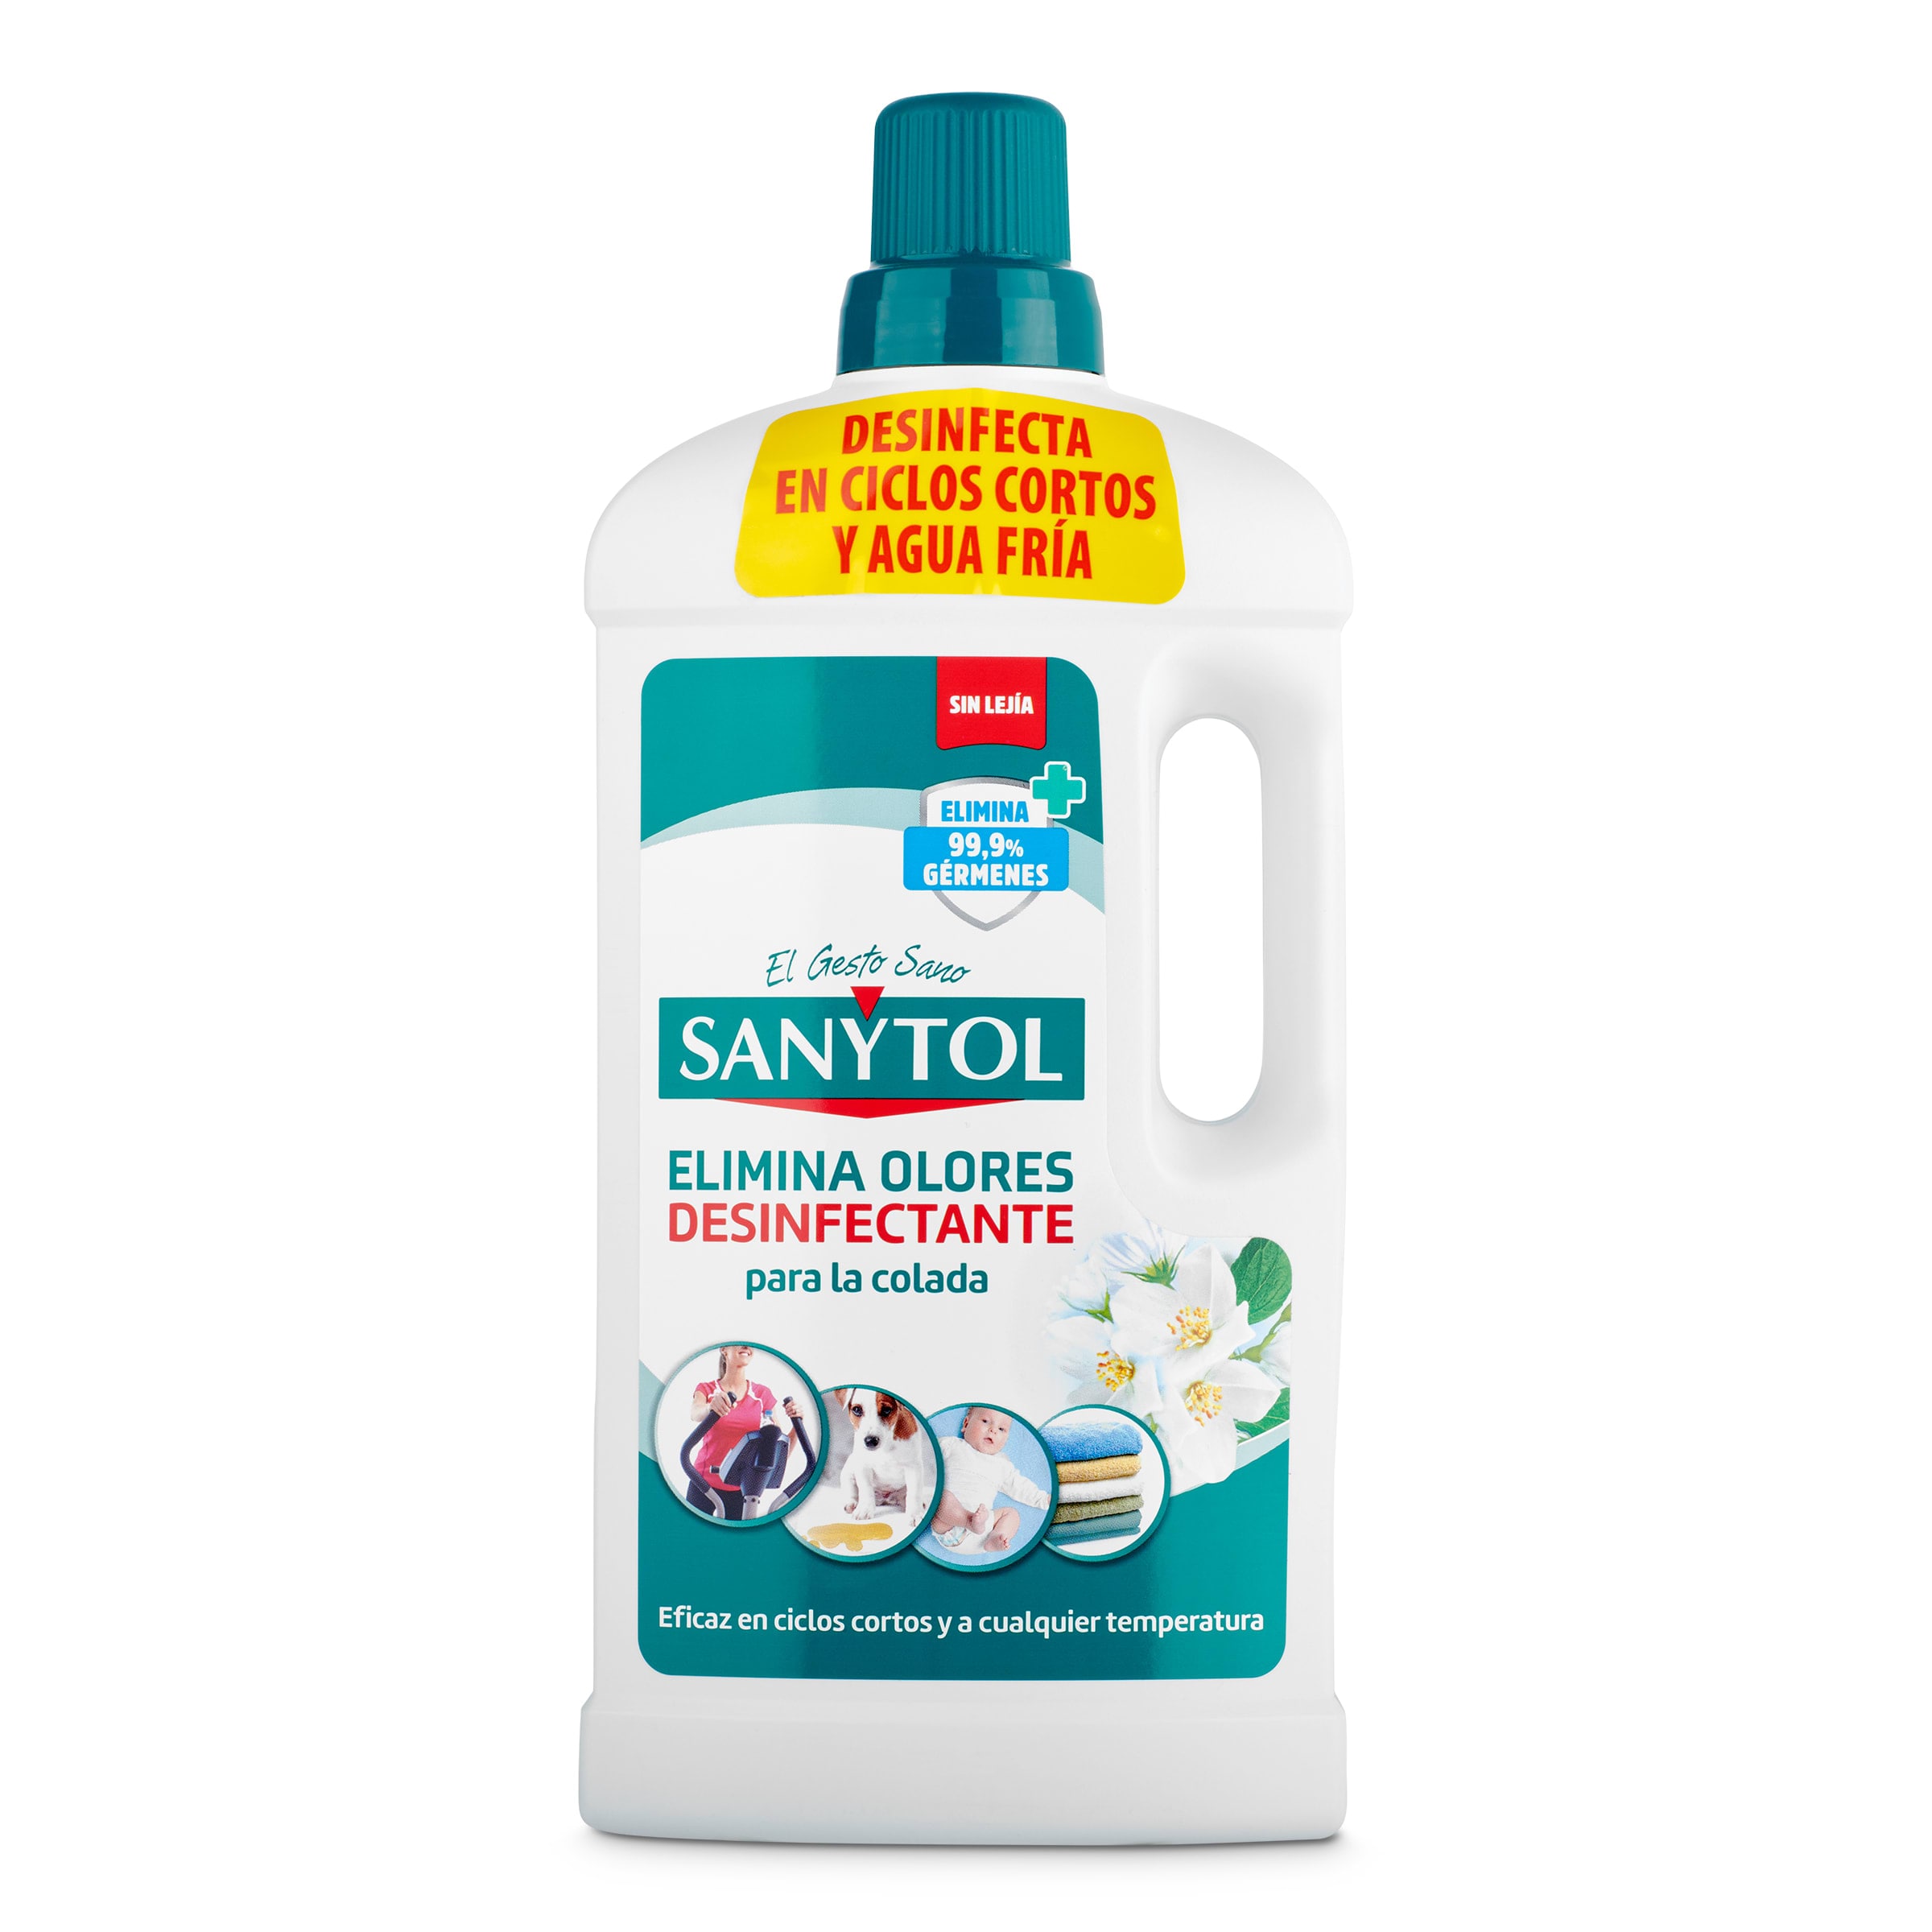 Aditivo desinfectante textil Sanytol botella 1.2 l - Supermercados DIA